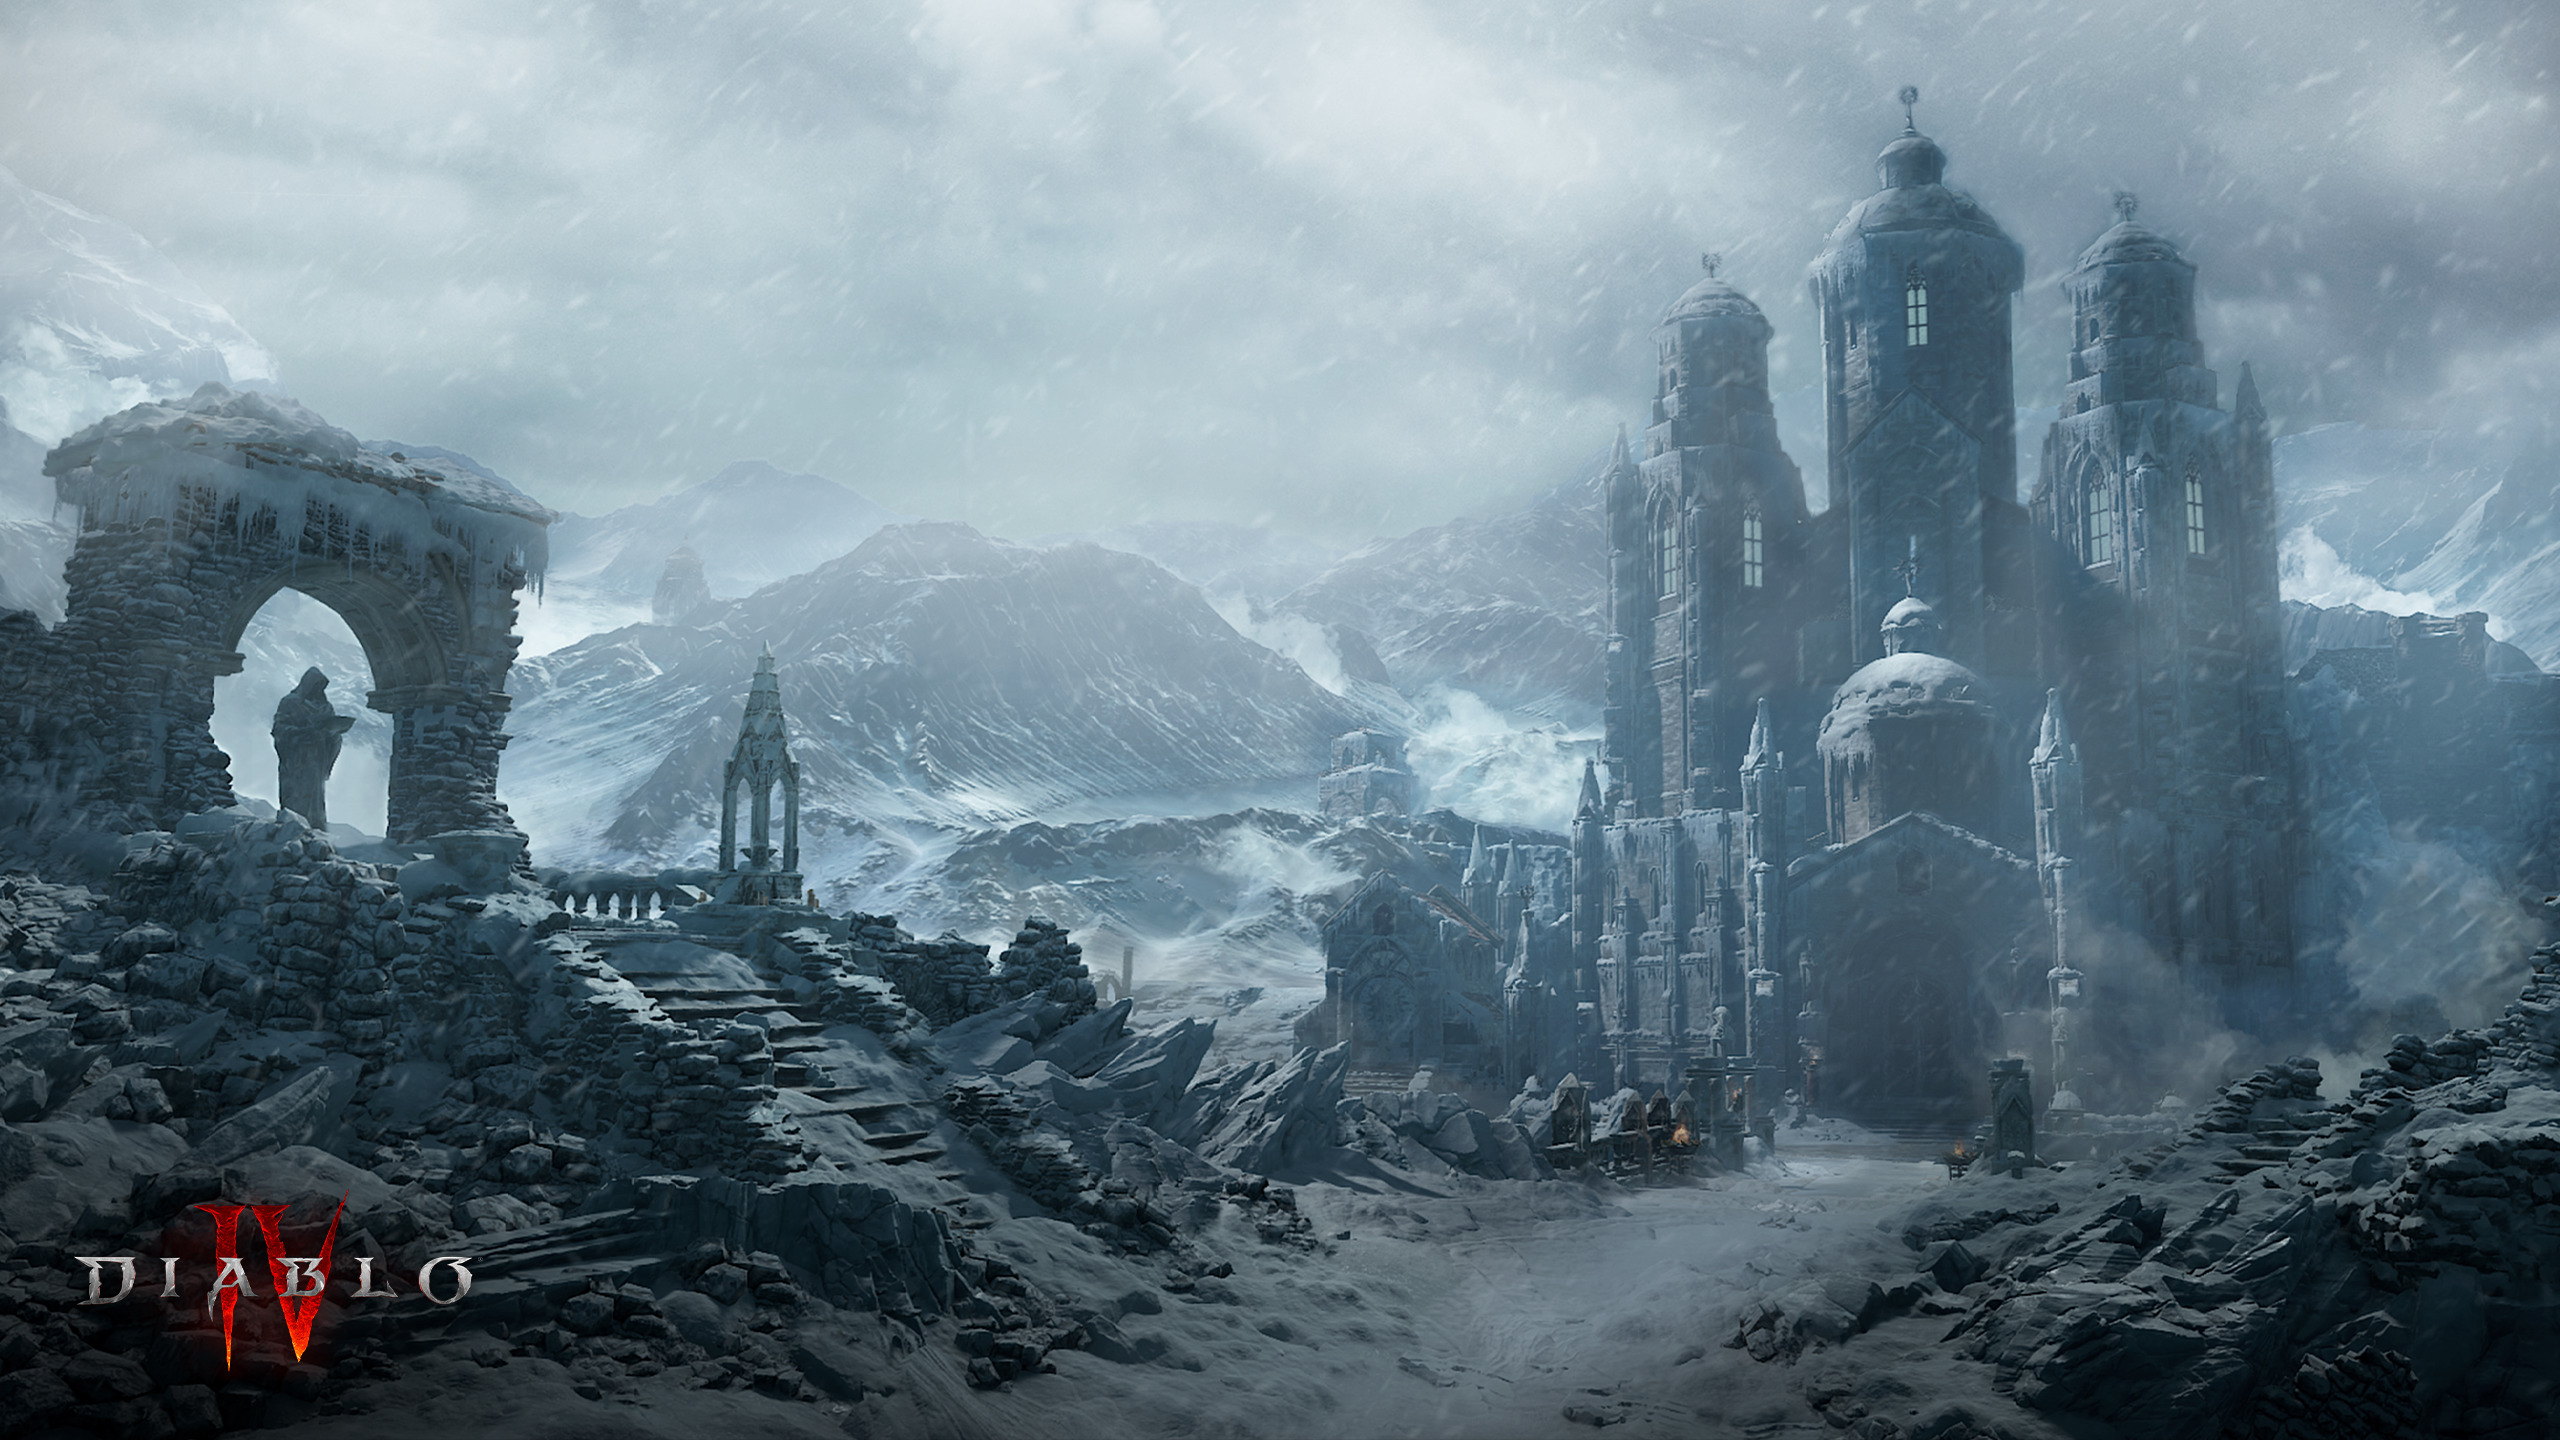 Diablo Diablo IV Video Games Snow Stairs Building Mountains Rocks Video Game Art 2560x1440